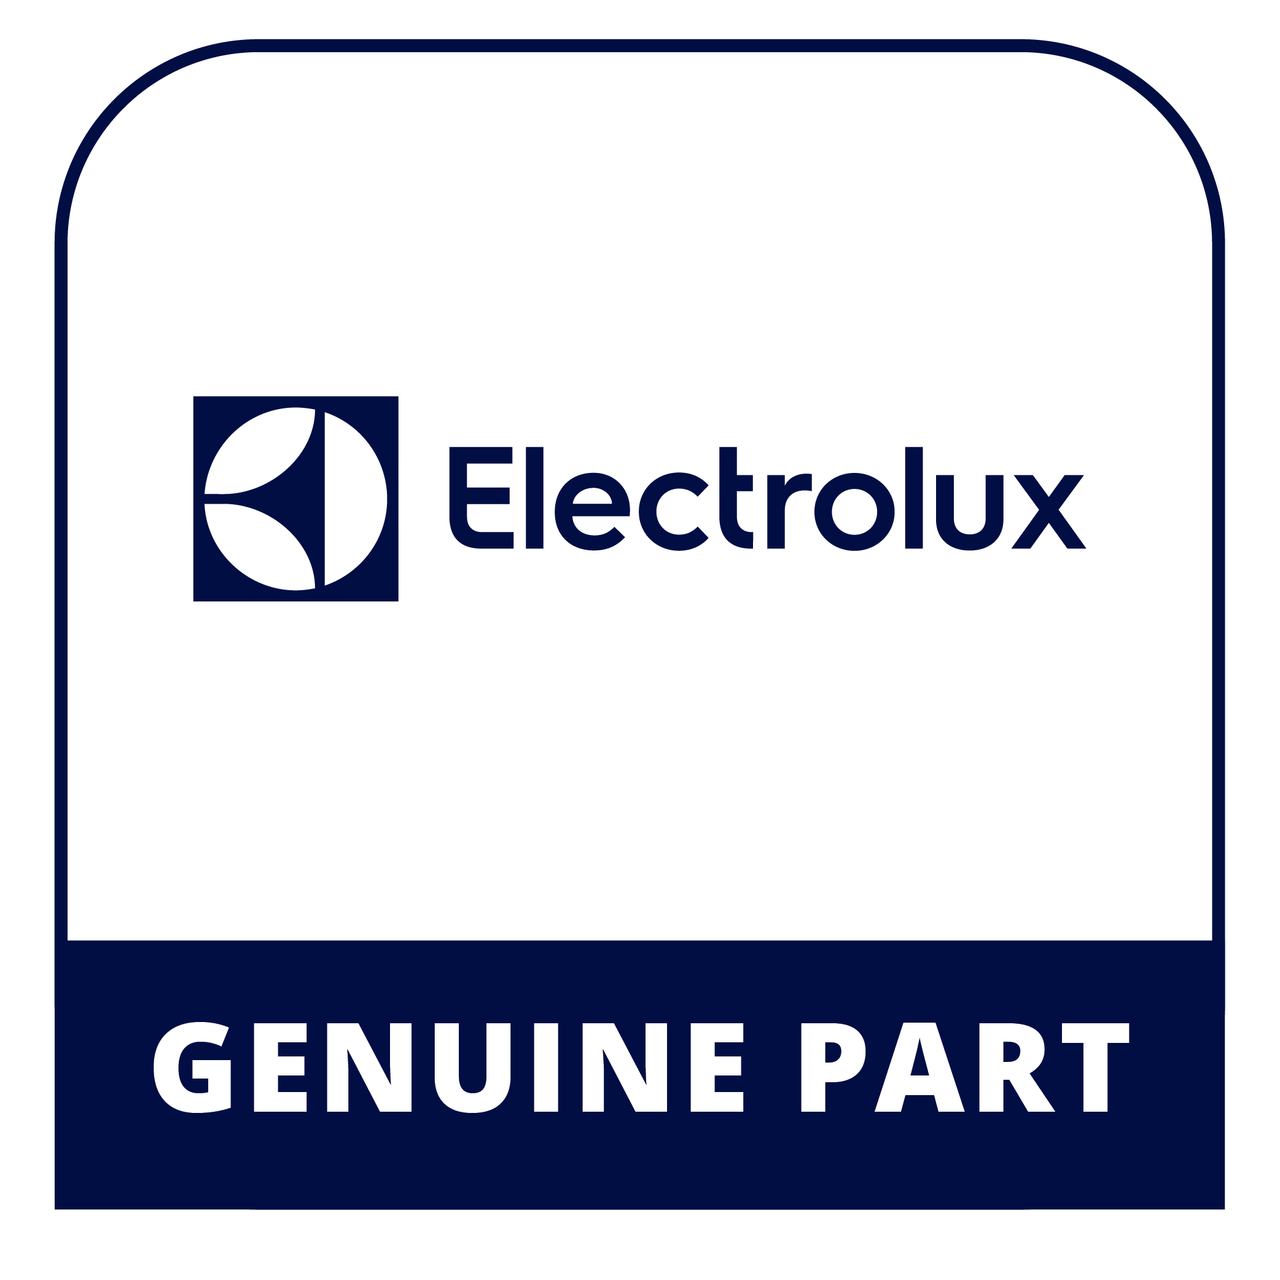 Frigidaire - Electrolux 318053132 - Gasket - Genuine Electrolux Part